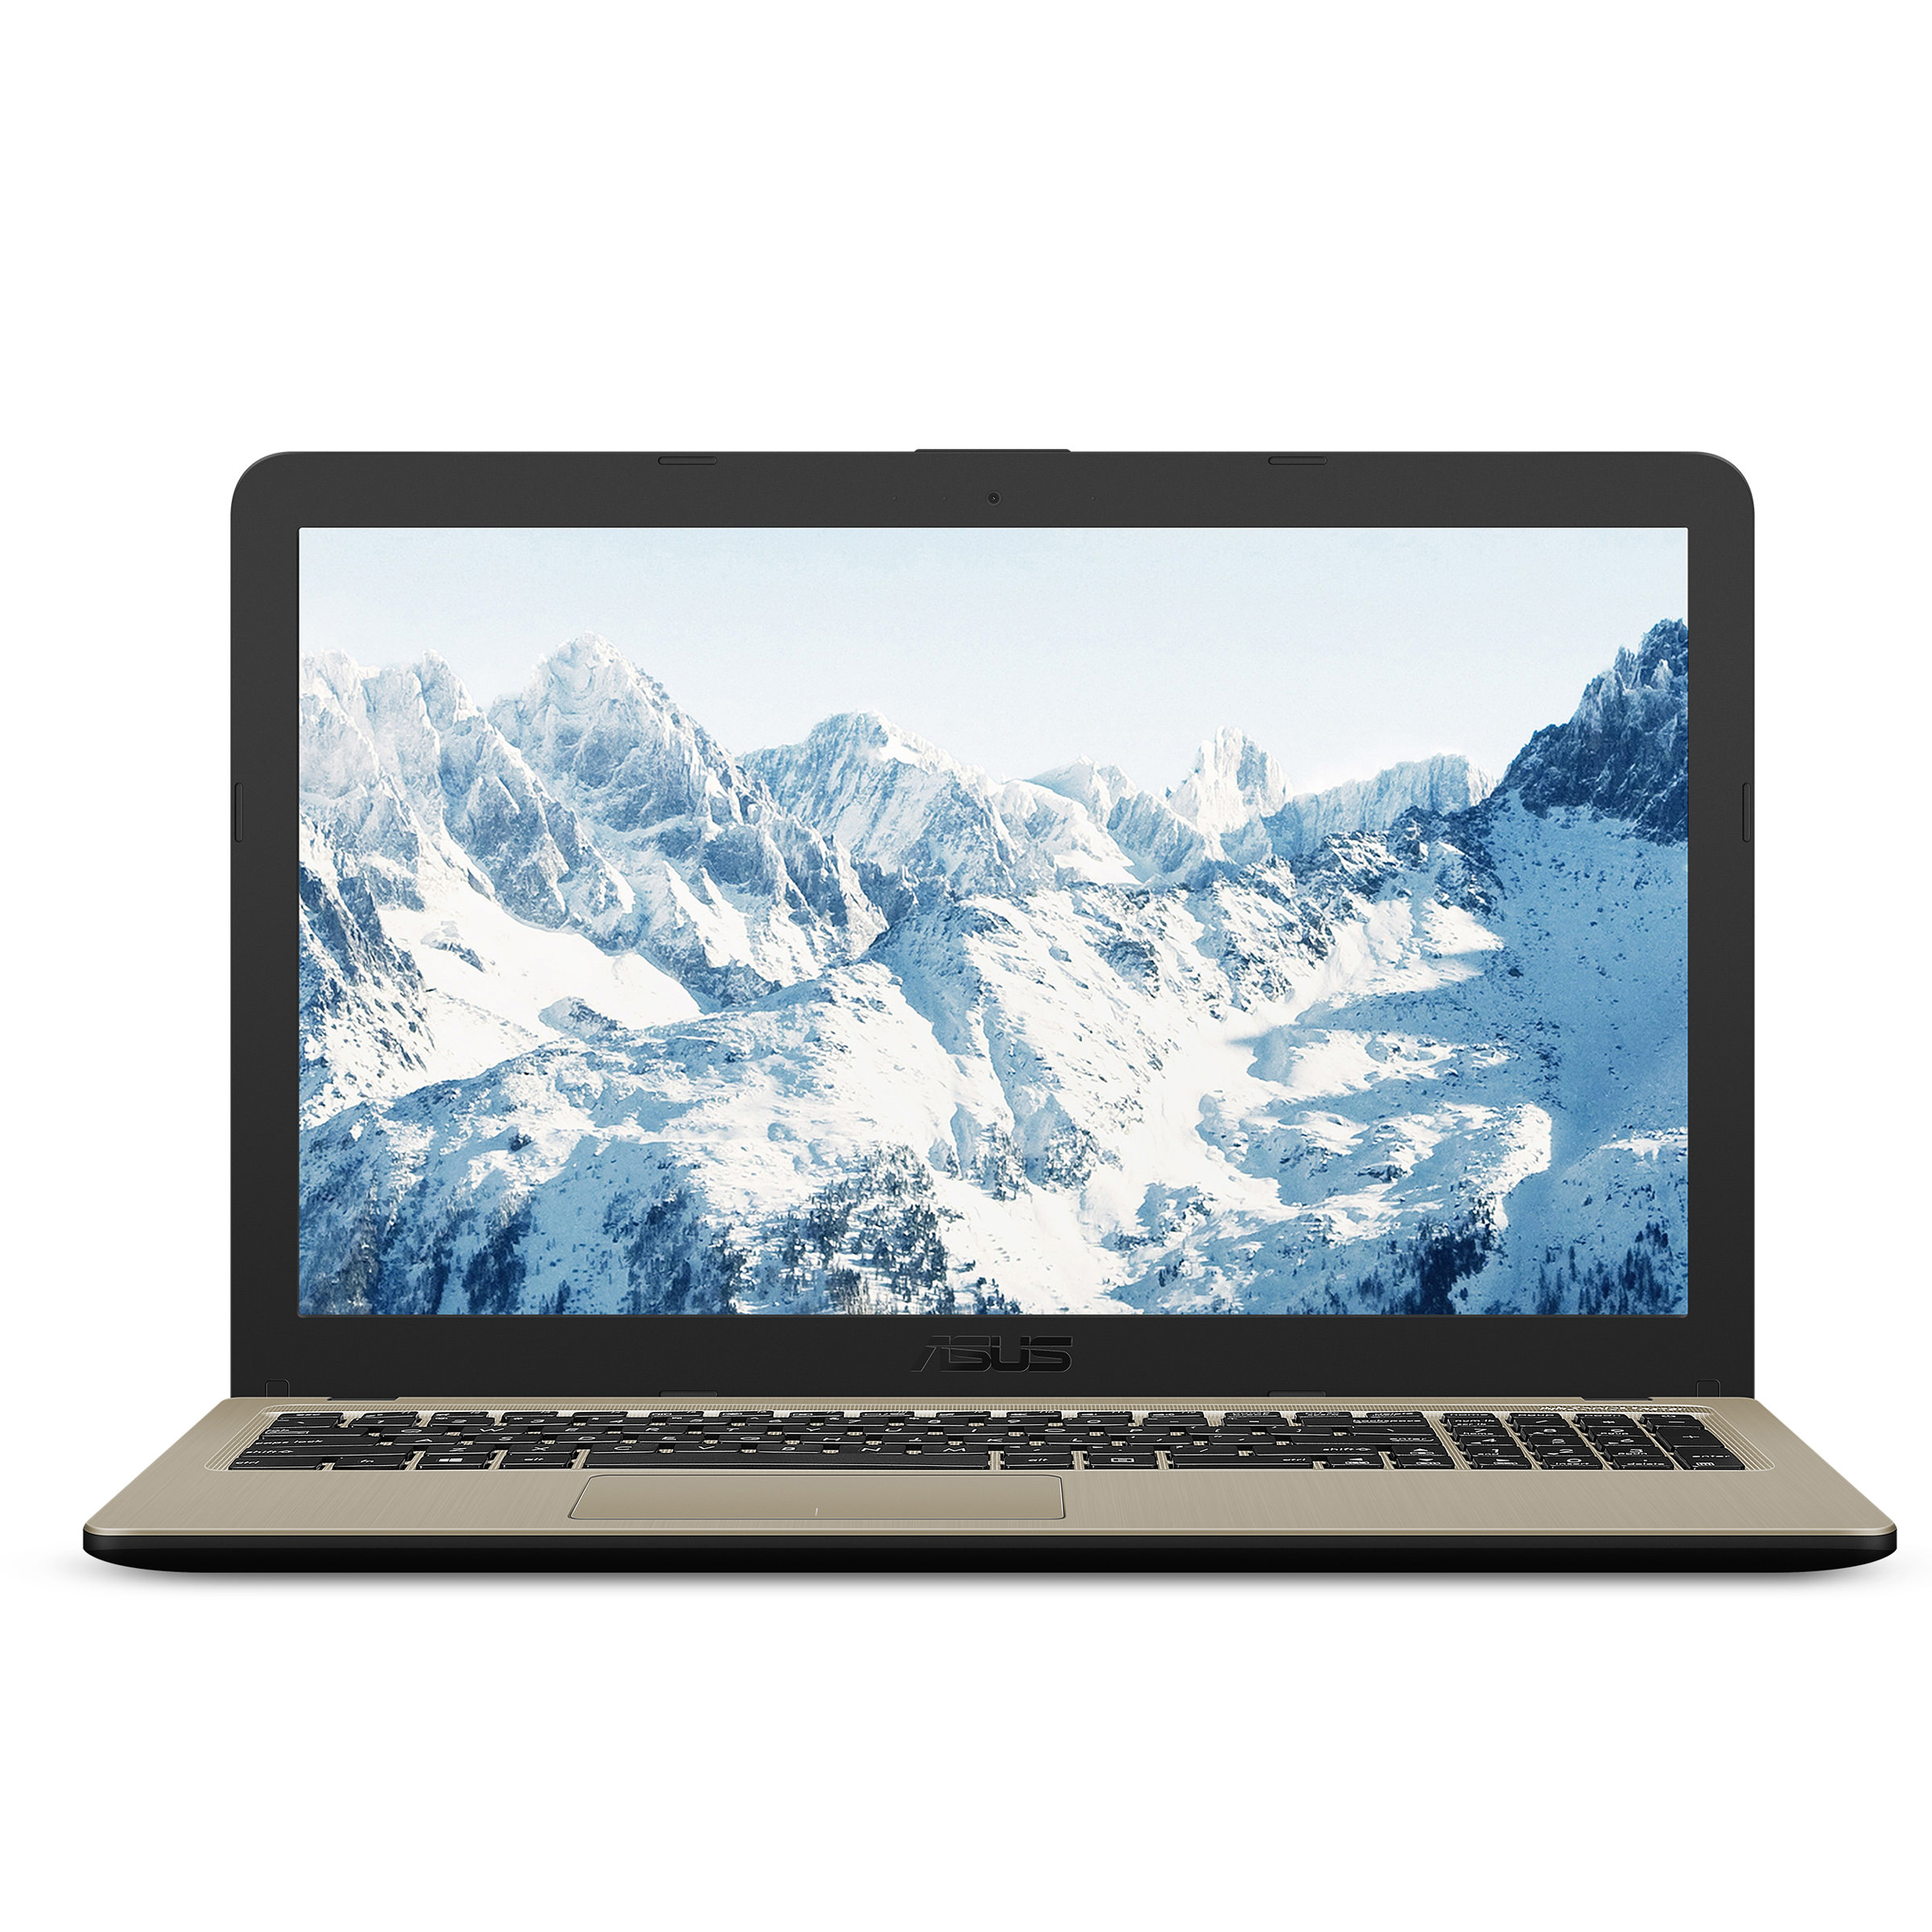 ASUS Laptop X540UA-DB71 15.6″ Laptop with 8th Gen Core i7, 8GB RAM, 1TB FireCuda SSHD